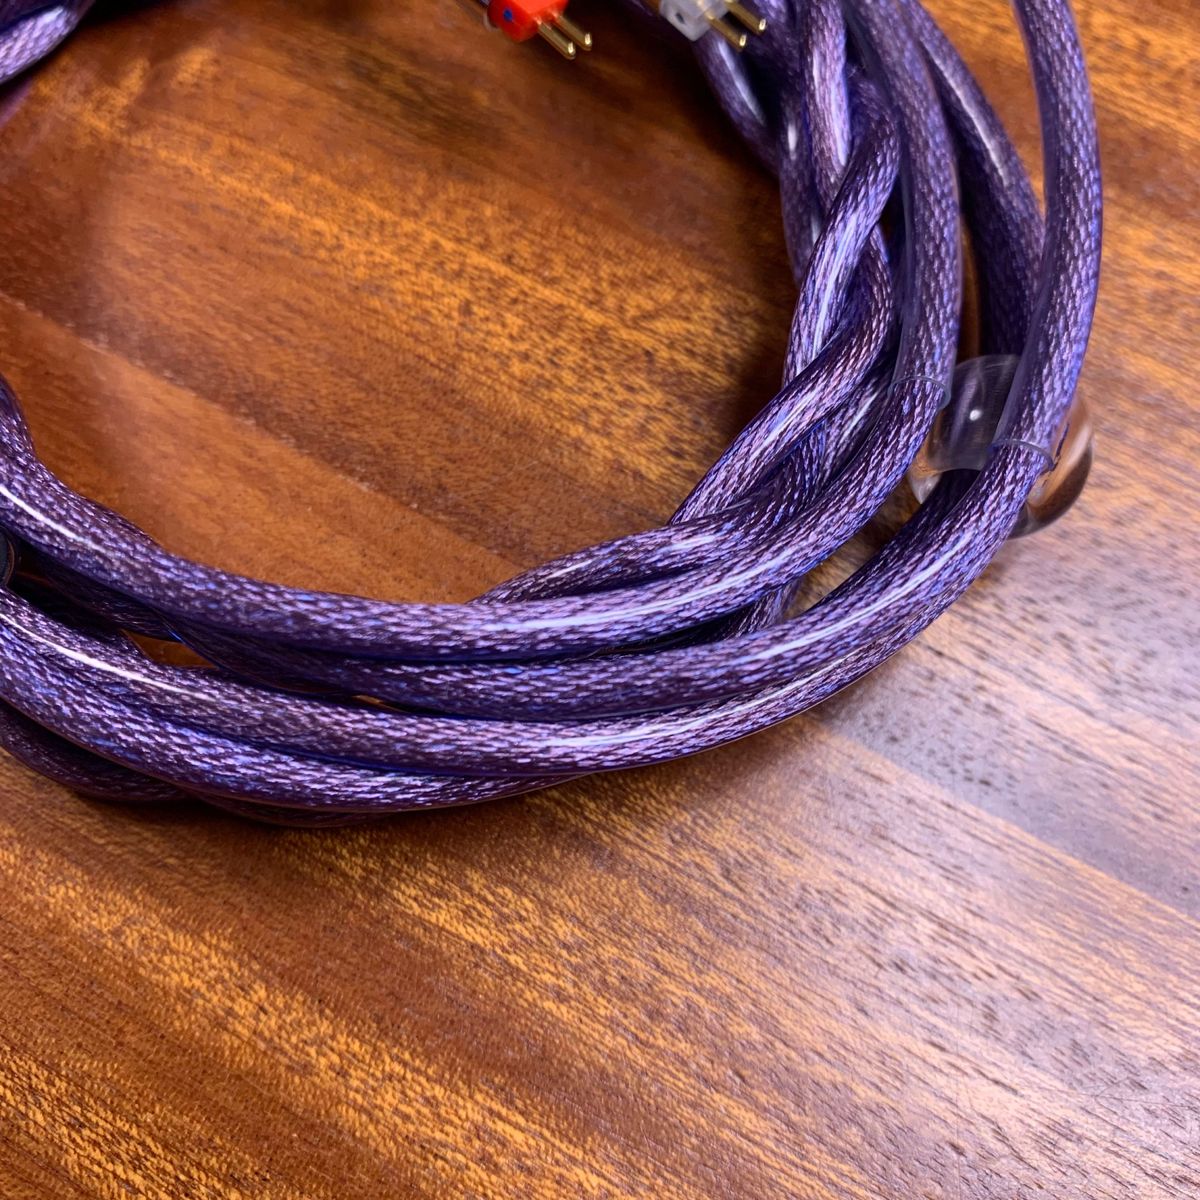 Nicehck PurpleGem 4.4mm 2pin